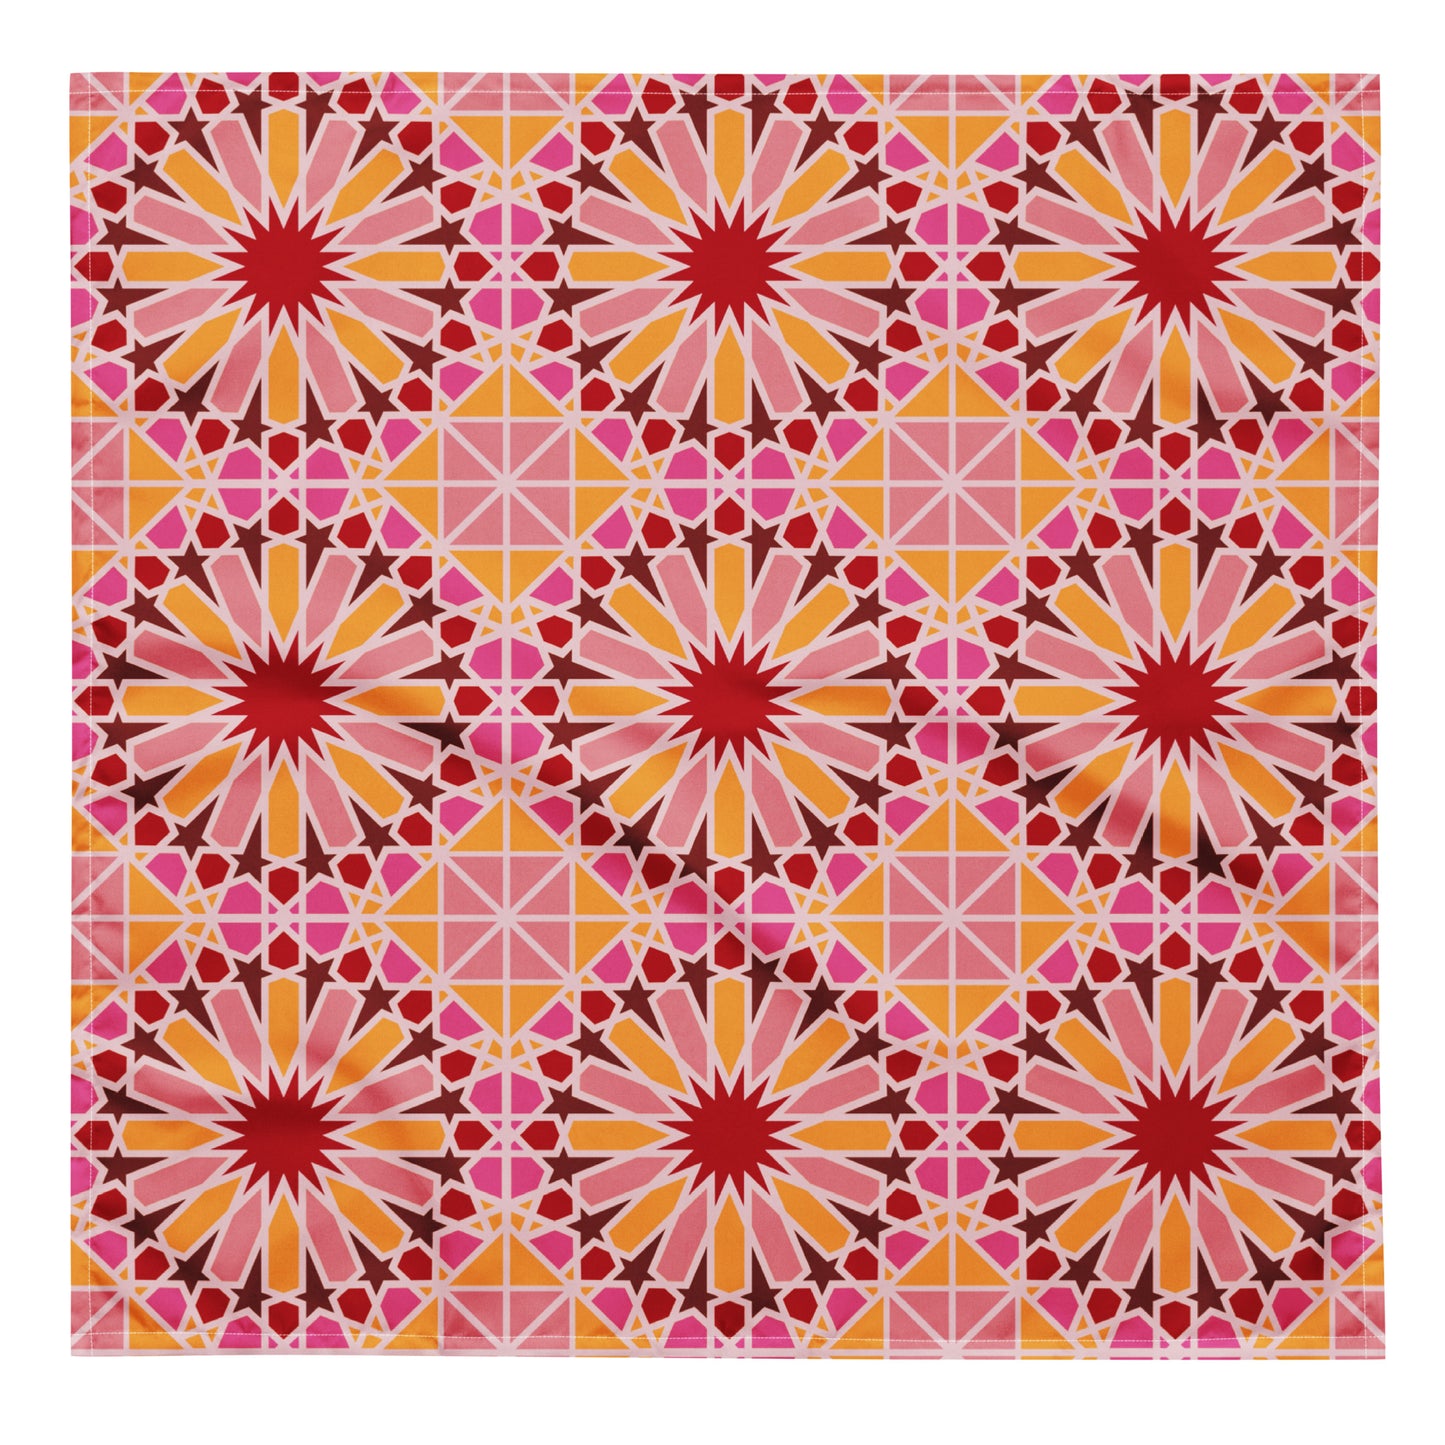 All-over print bandana - Geometric Candy